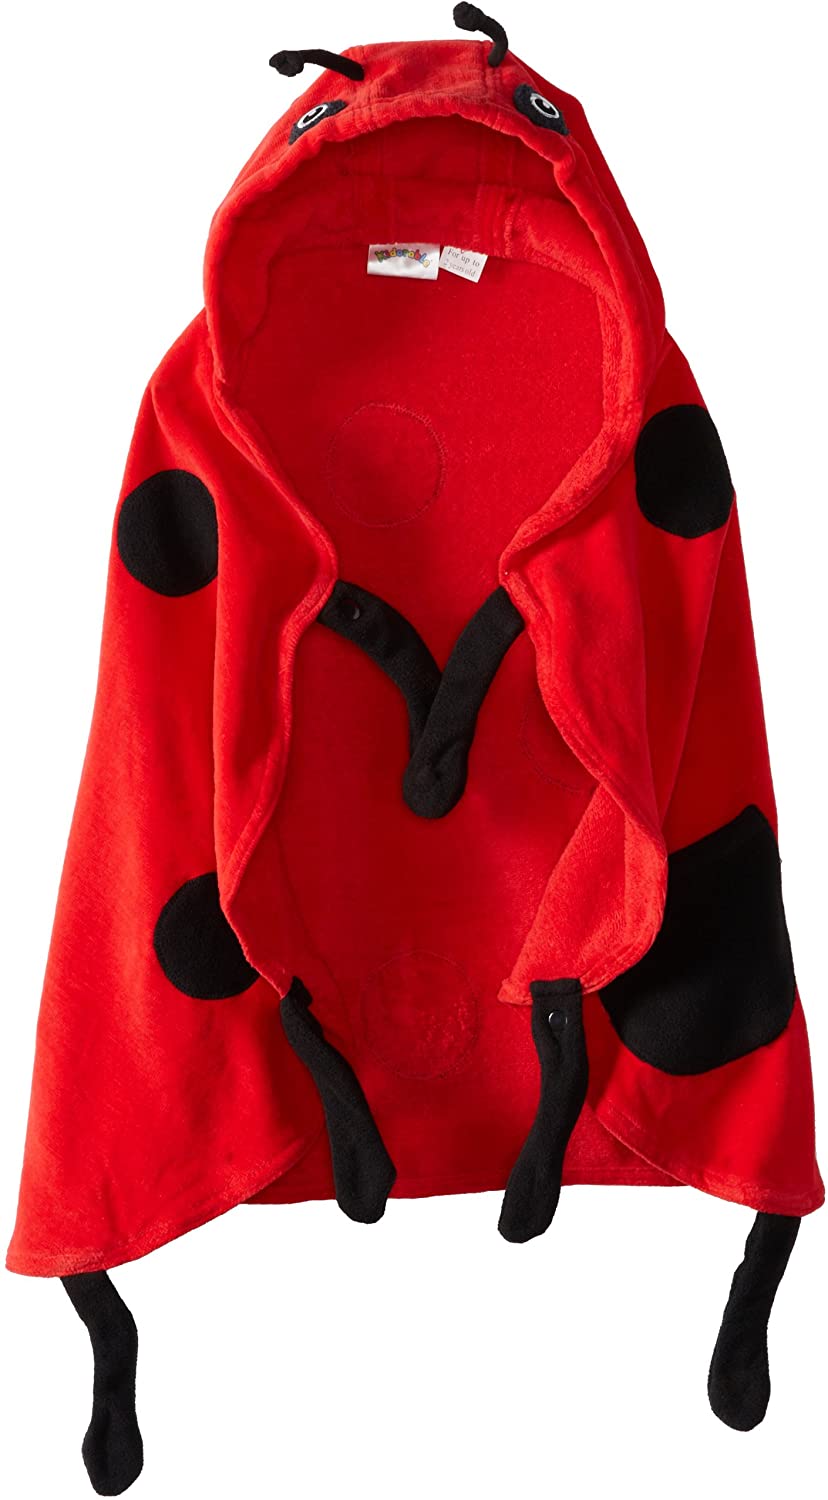 Kidorable Red Ladybug All-Cotton Hooded Towel for Girls w/Fun Ladybug Eyes, Antennae, Legs